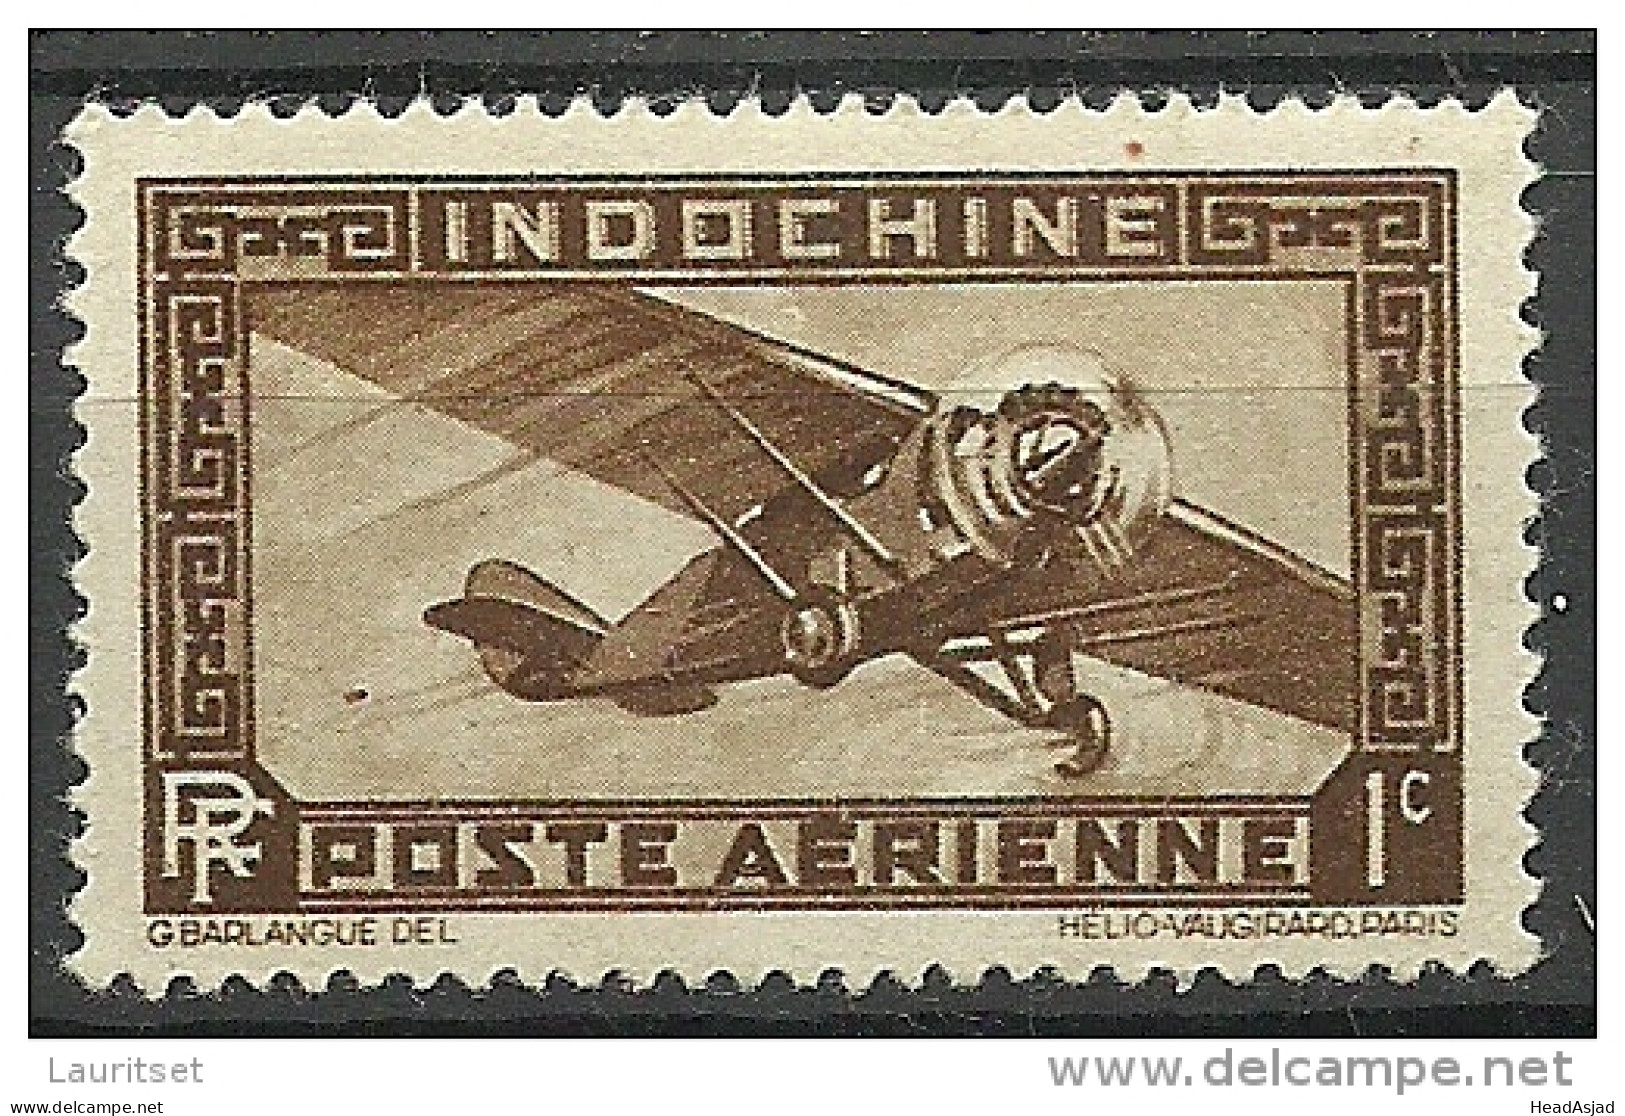 France INDO-CHINA Michel 184 * Flugzeug Air Plane - Avions